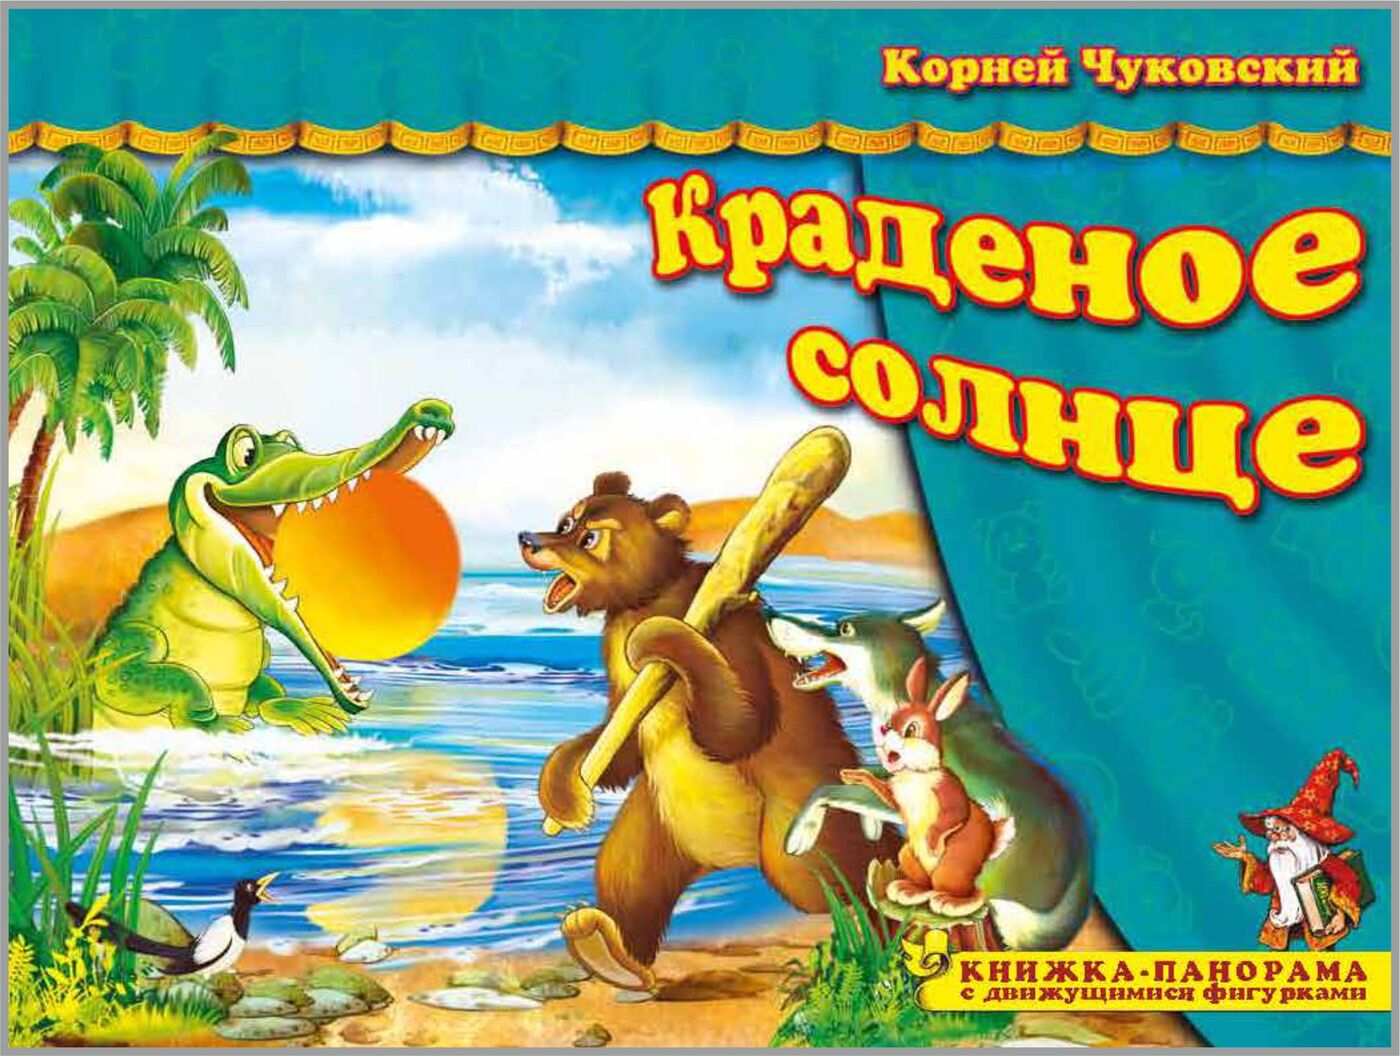 Книжка панорама Чуковский краденое солнце